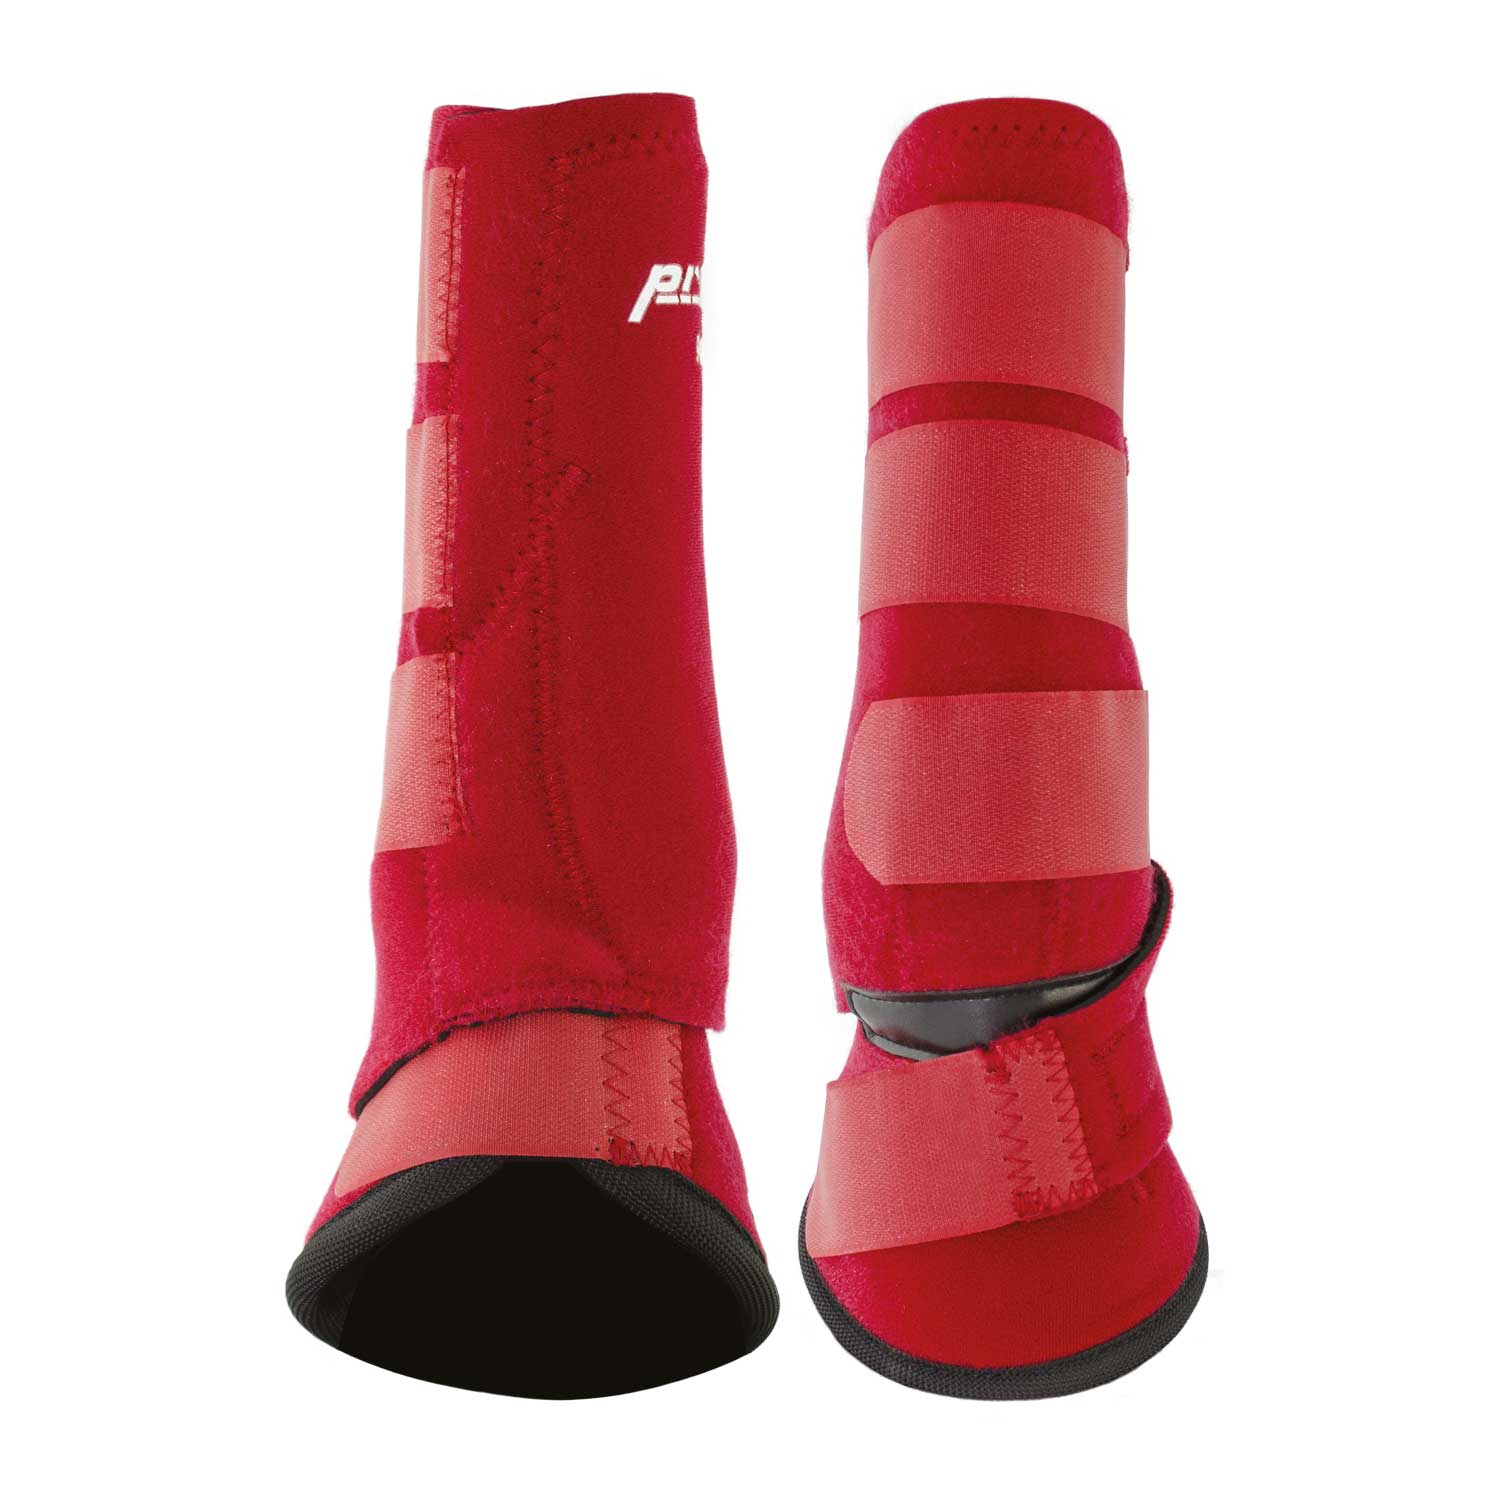 Combination Boots in neoprene con chiusure in velcro AIRFLOW RED